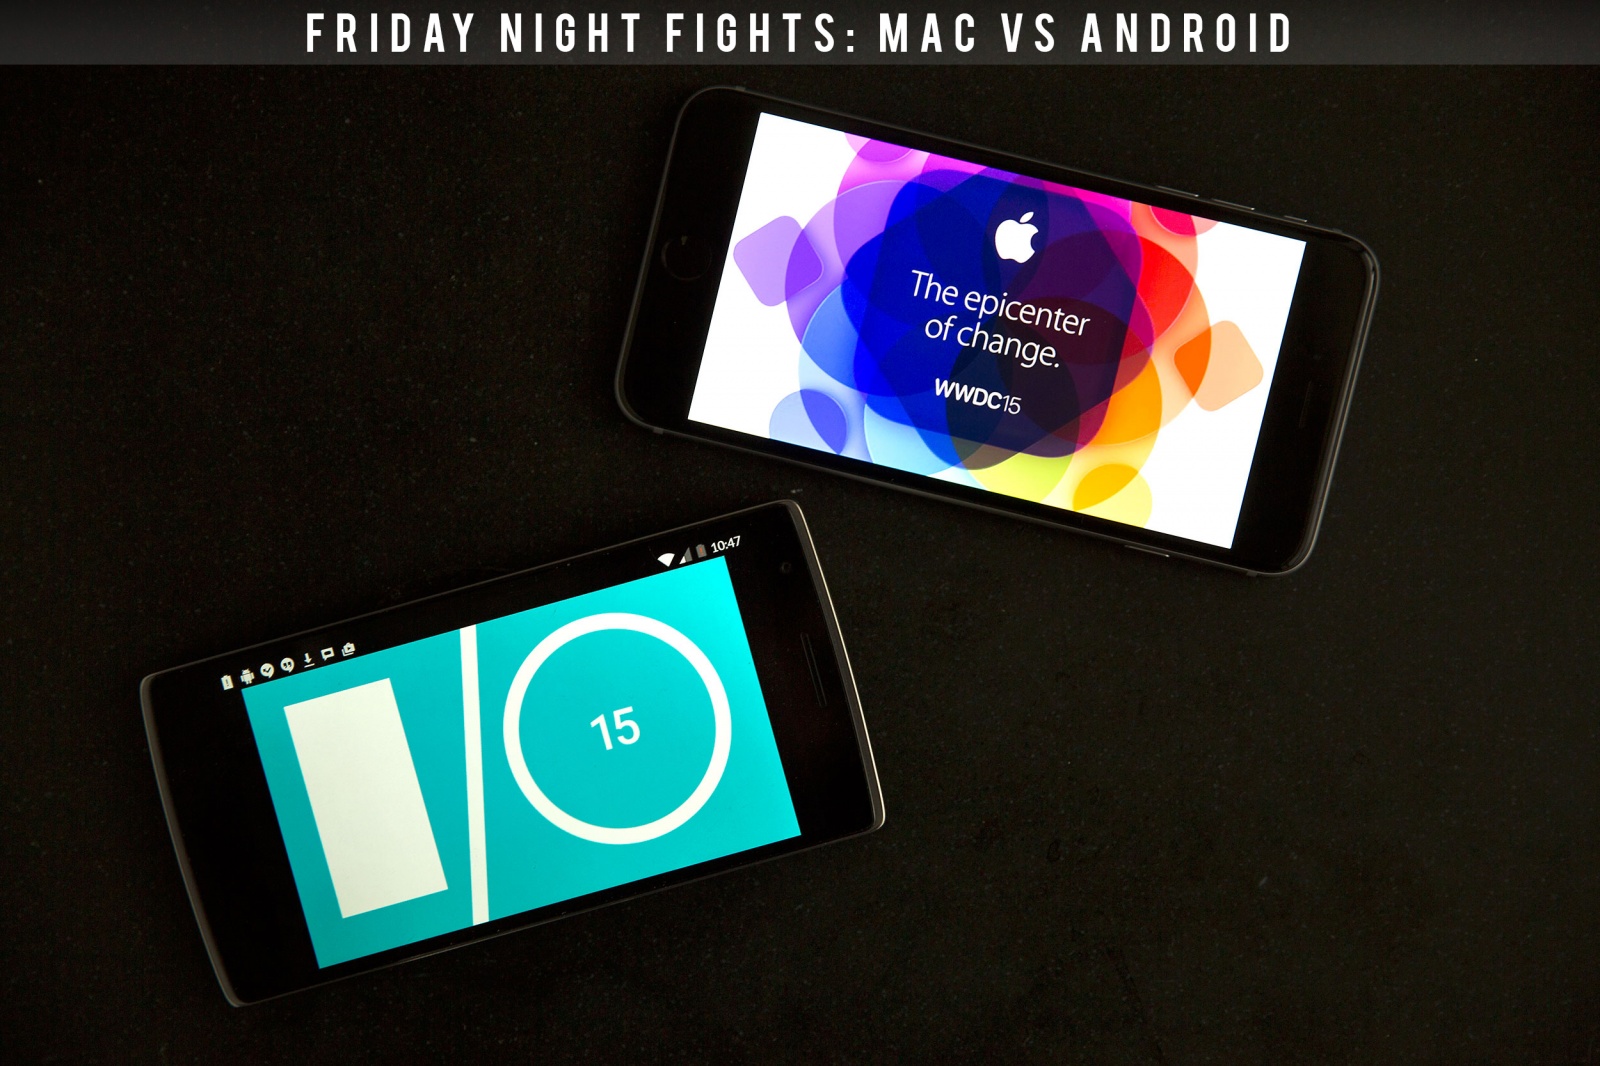 Friday Night Fights returns!